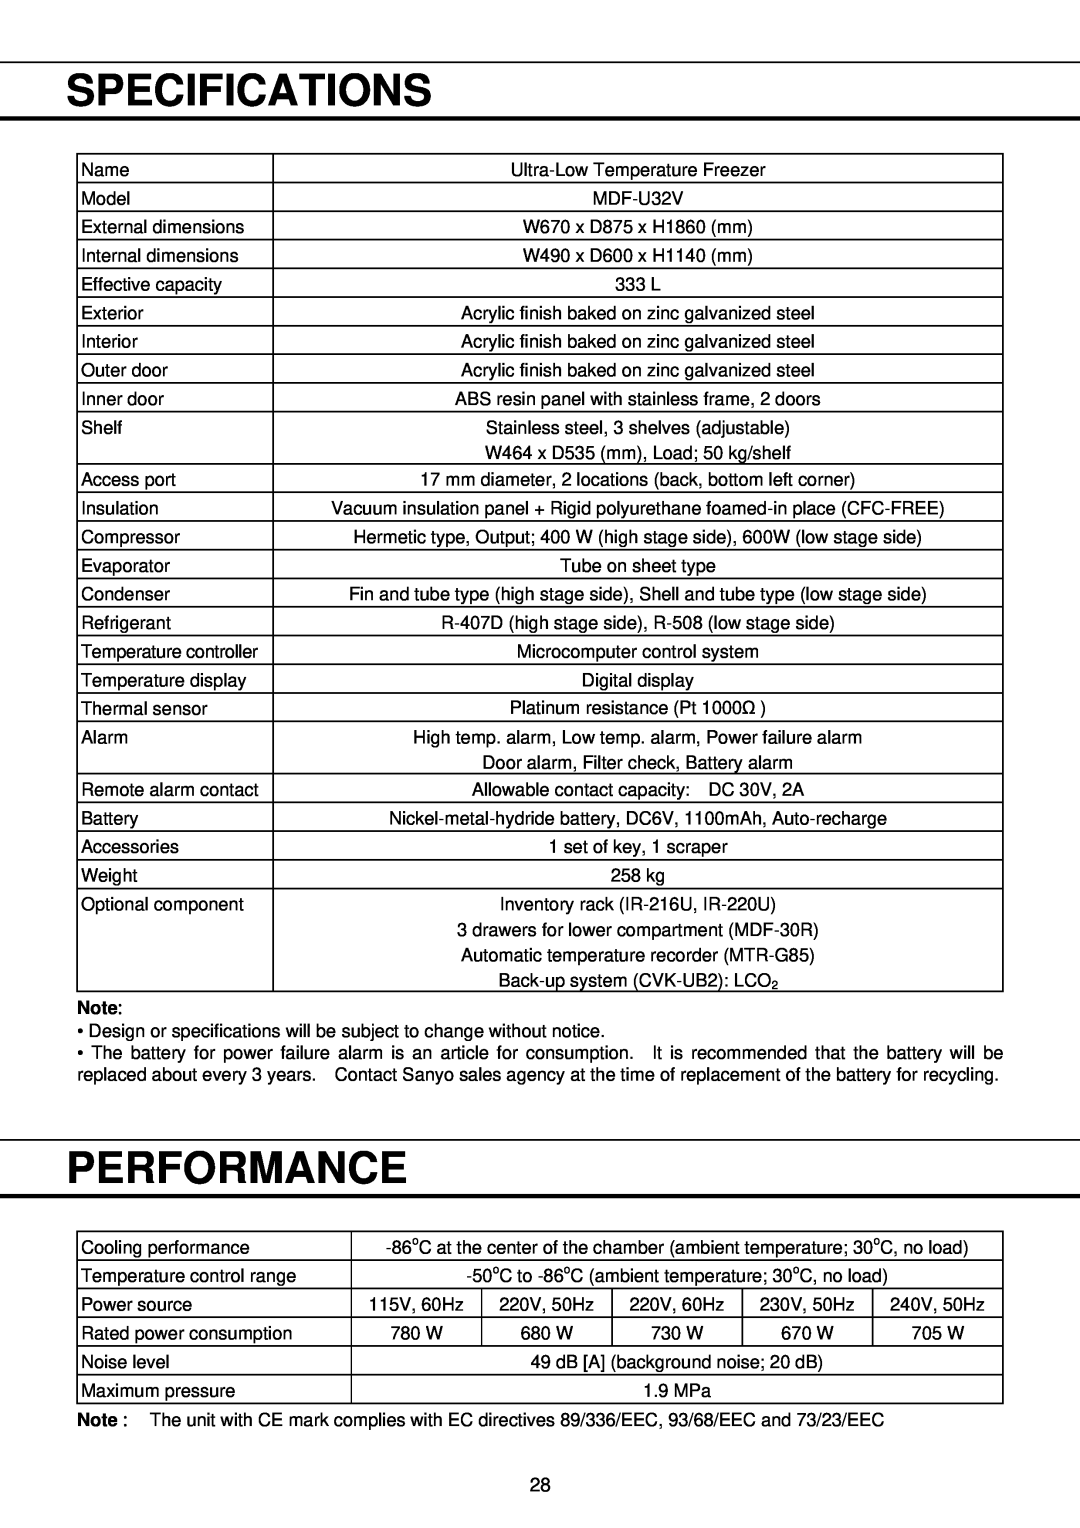 Sanyo MDF-U32V instruction manual Specifications, Performance 